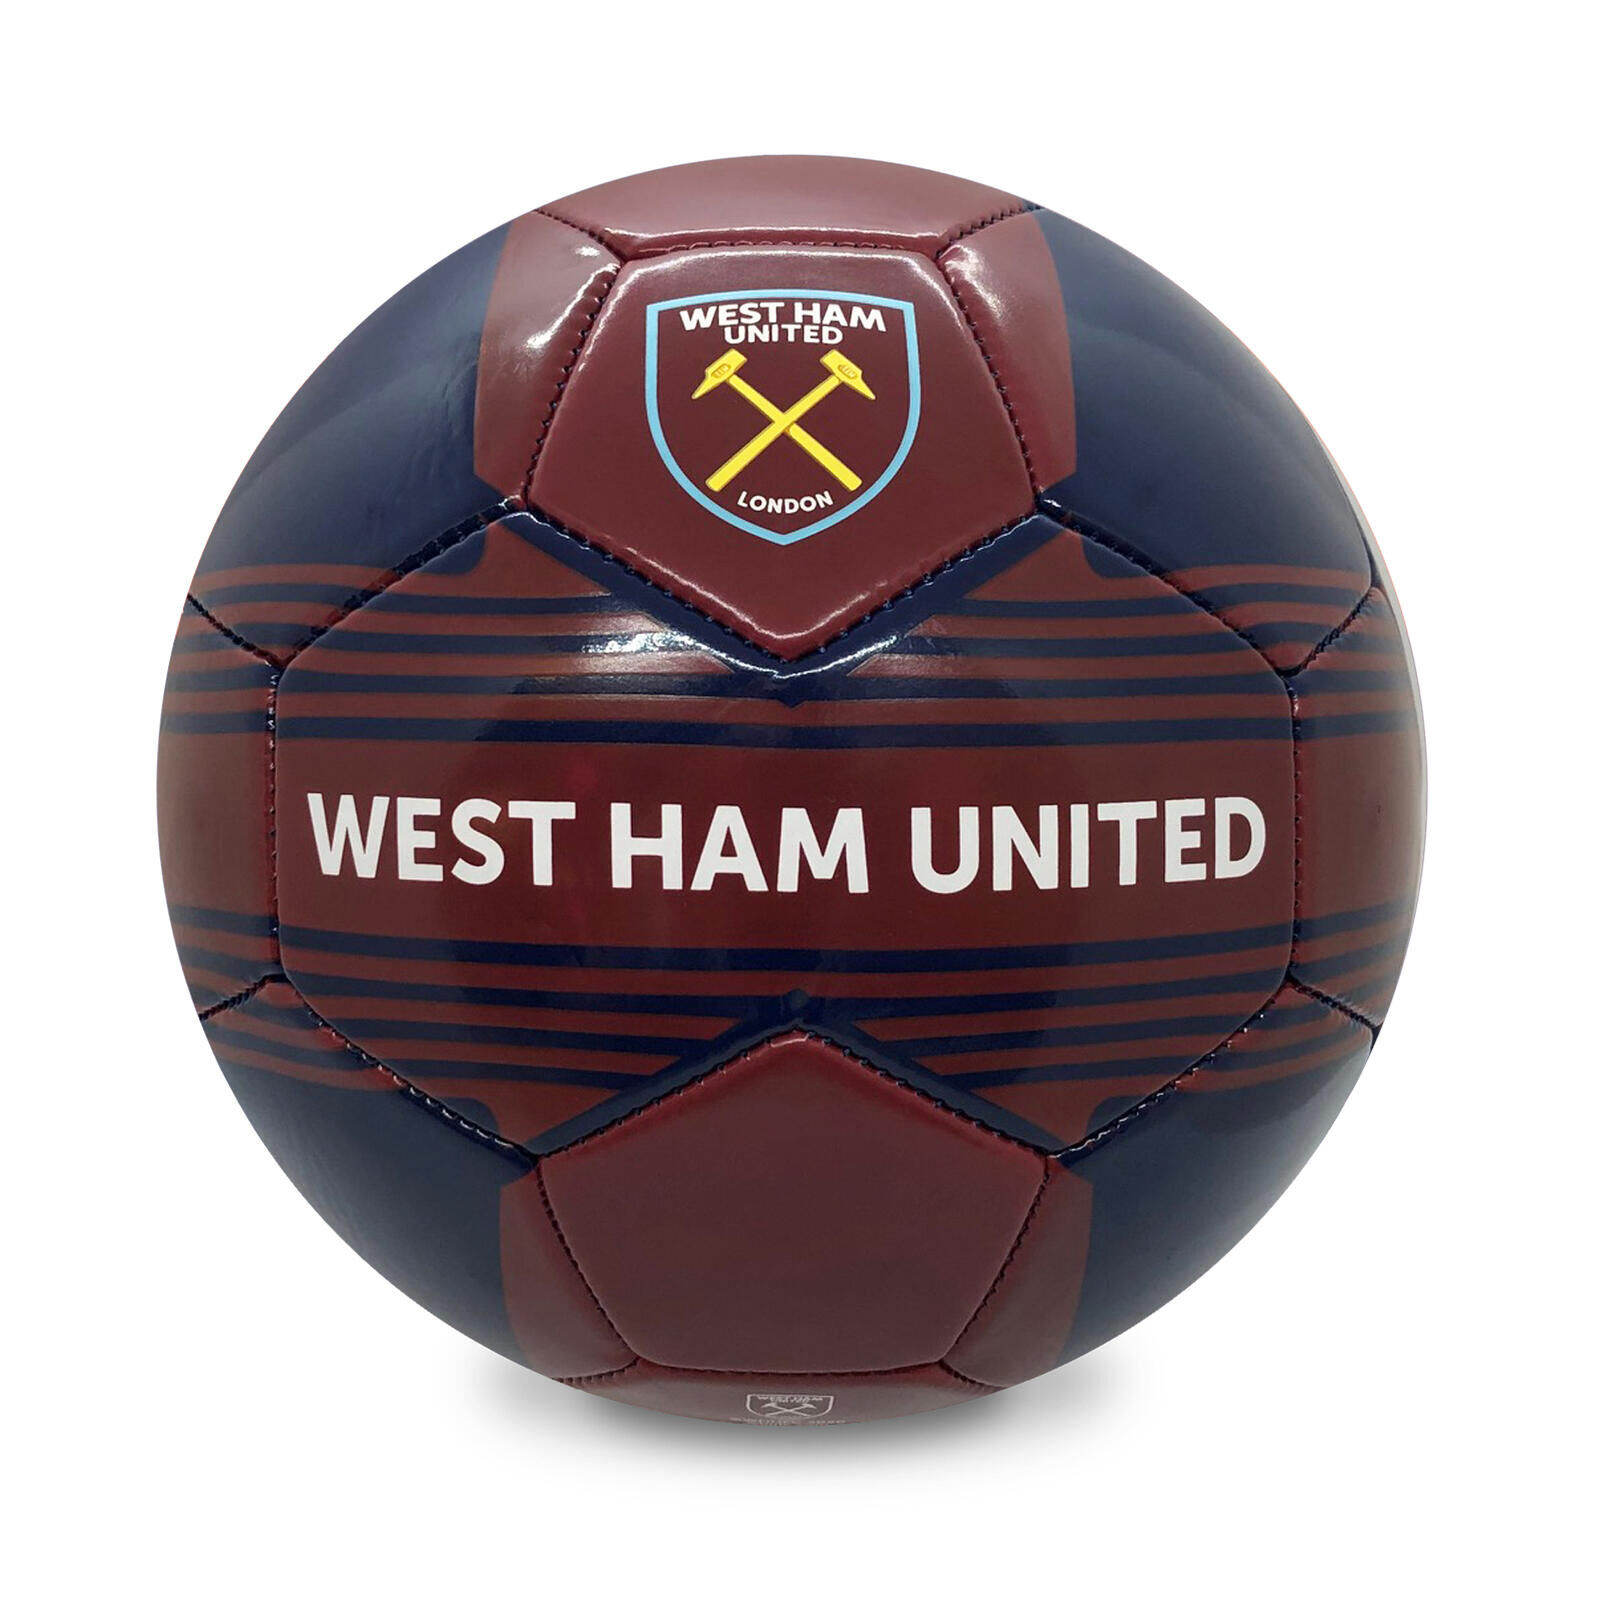 WEST HAM UNITED West Ham United Football Size 4 Crest Claret OFFICIAL Gift